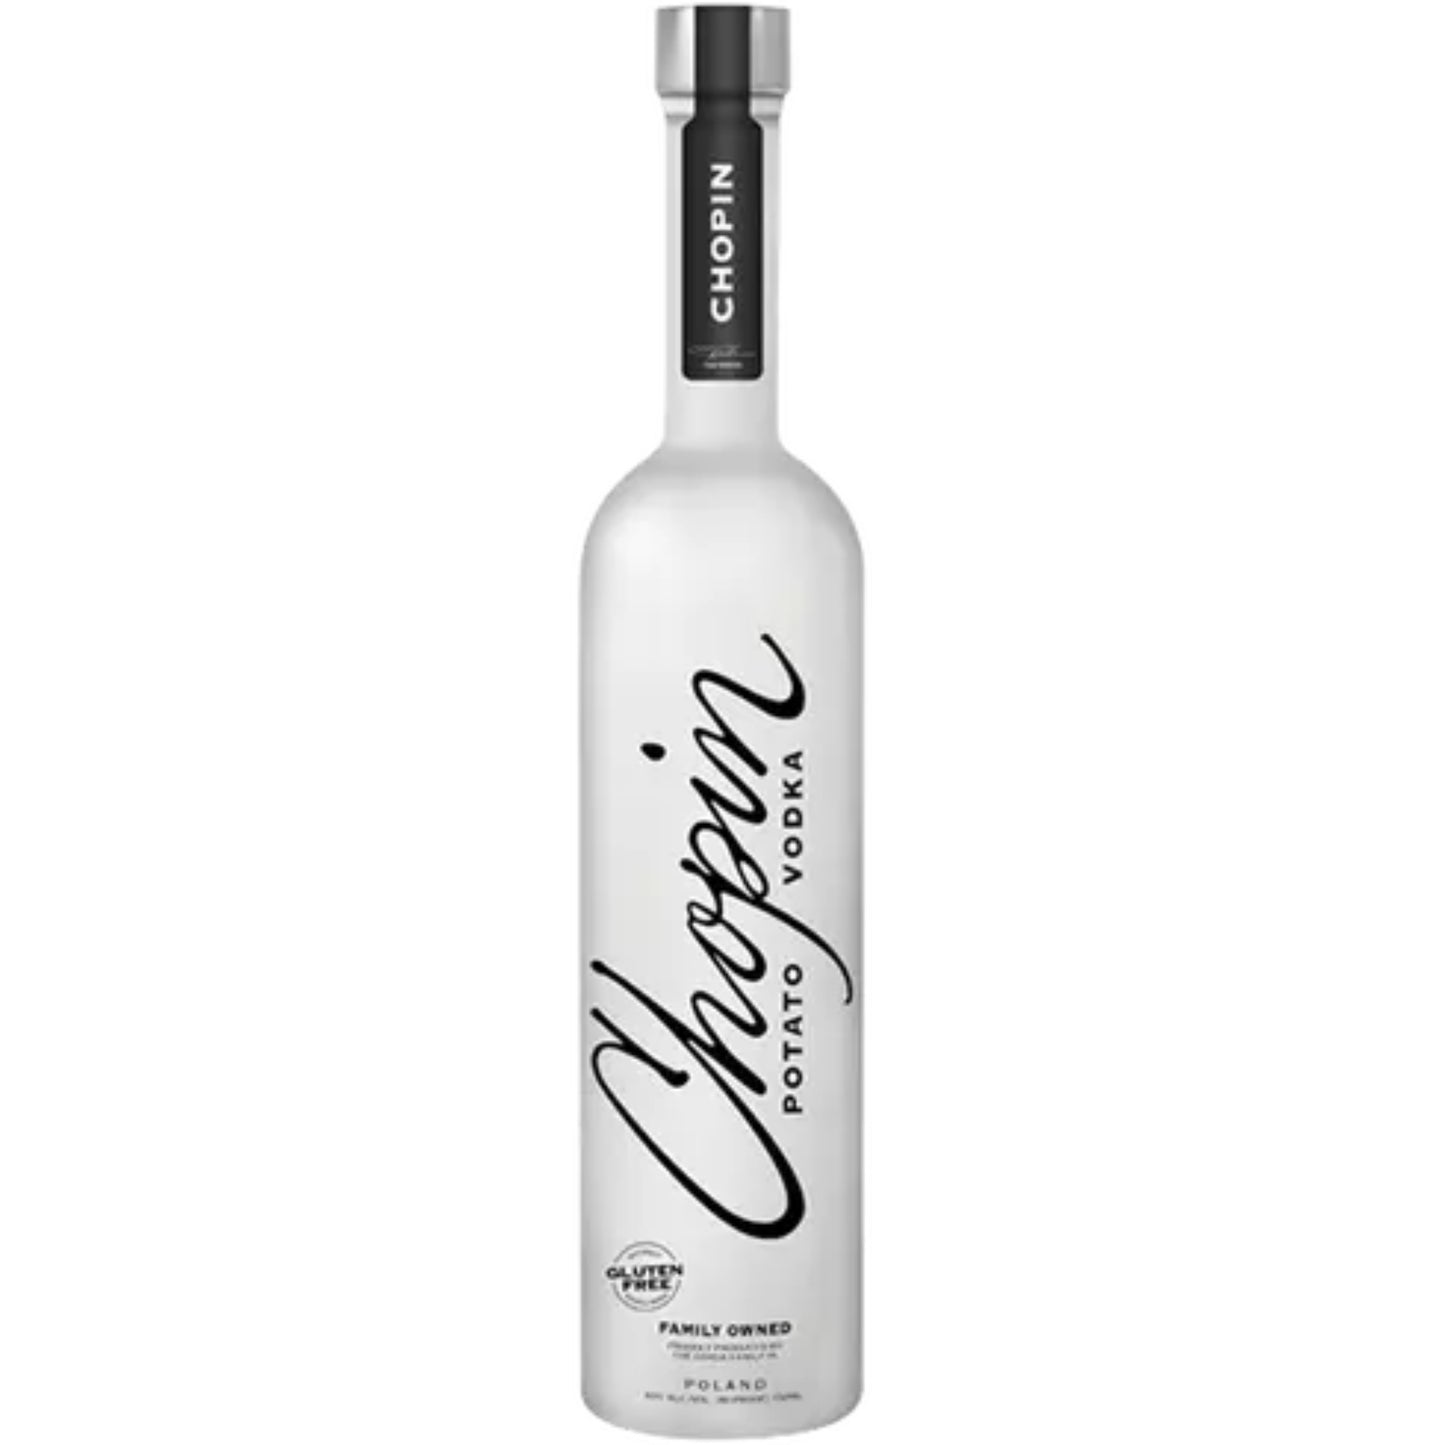 Chopin Polish Potato Vodka - Liquor Geeks